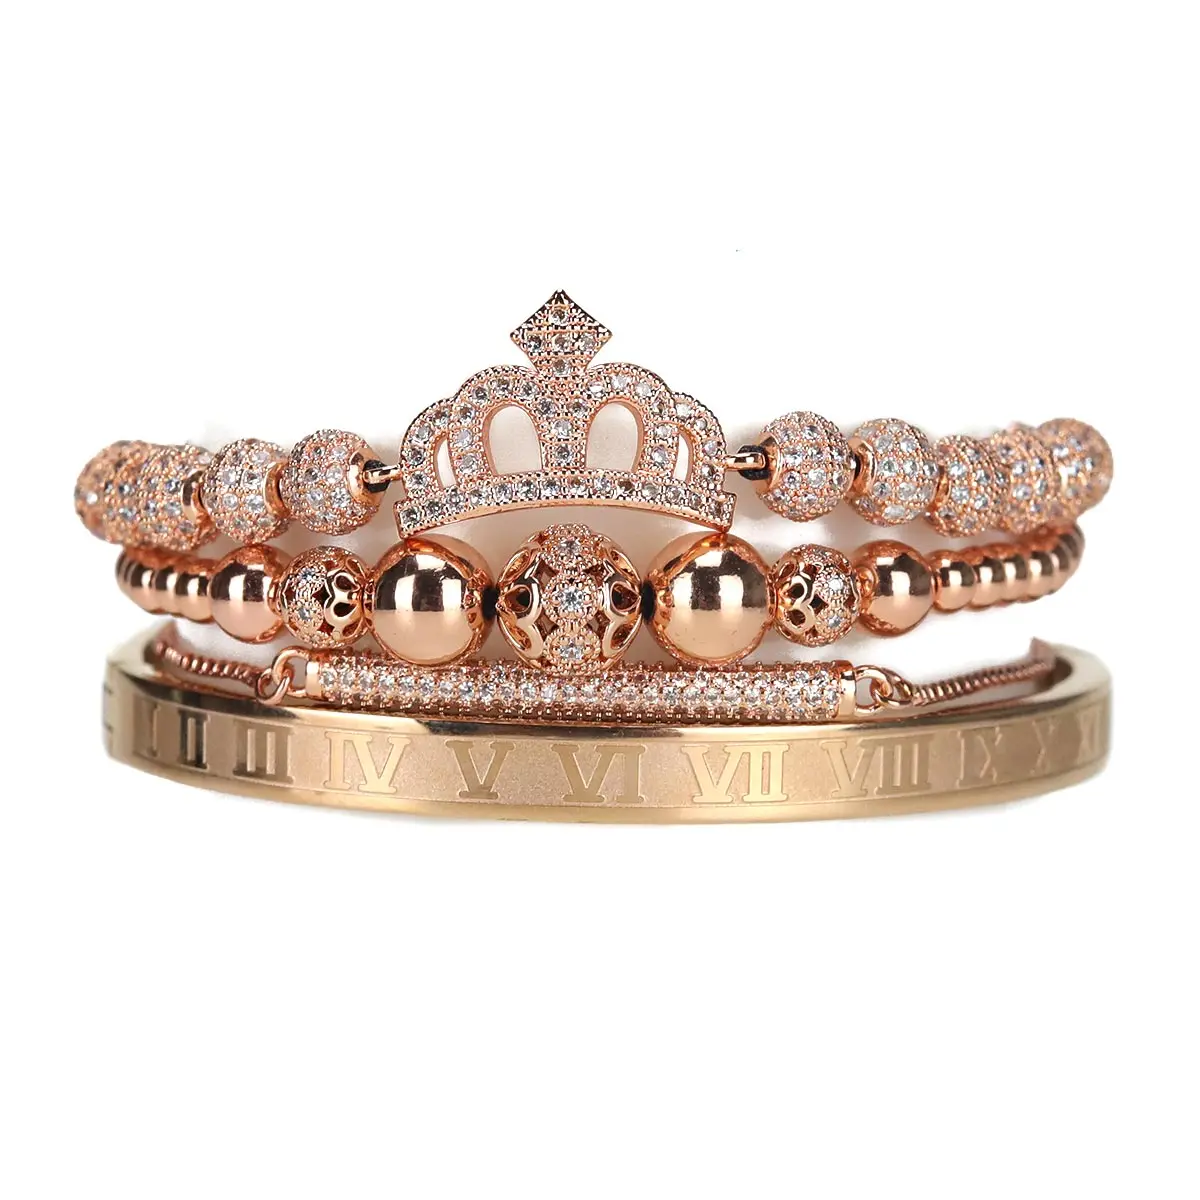 4pcs/set Luxury royal queen crown bracelet set stainless steel beads cz charms Roman bracelets & bangles for women jewelry